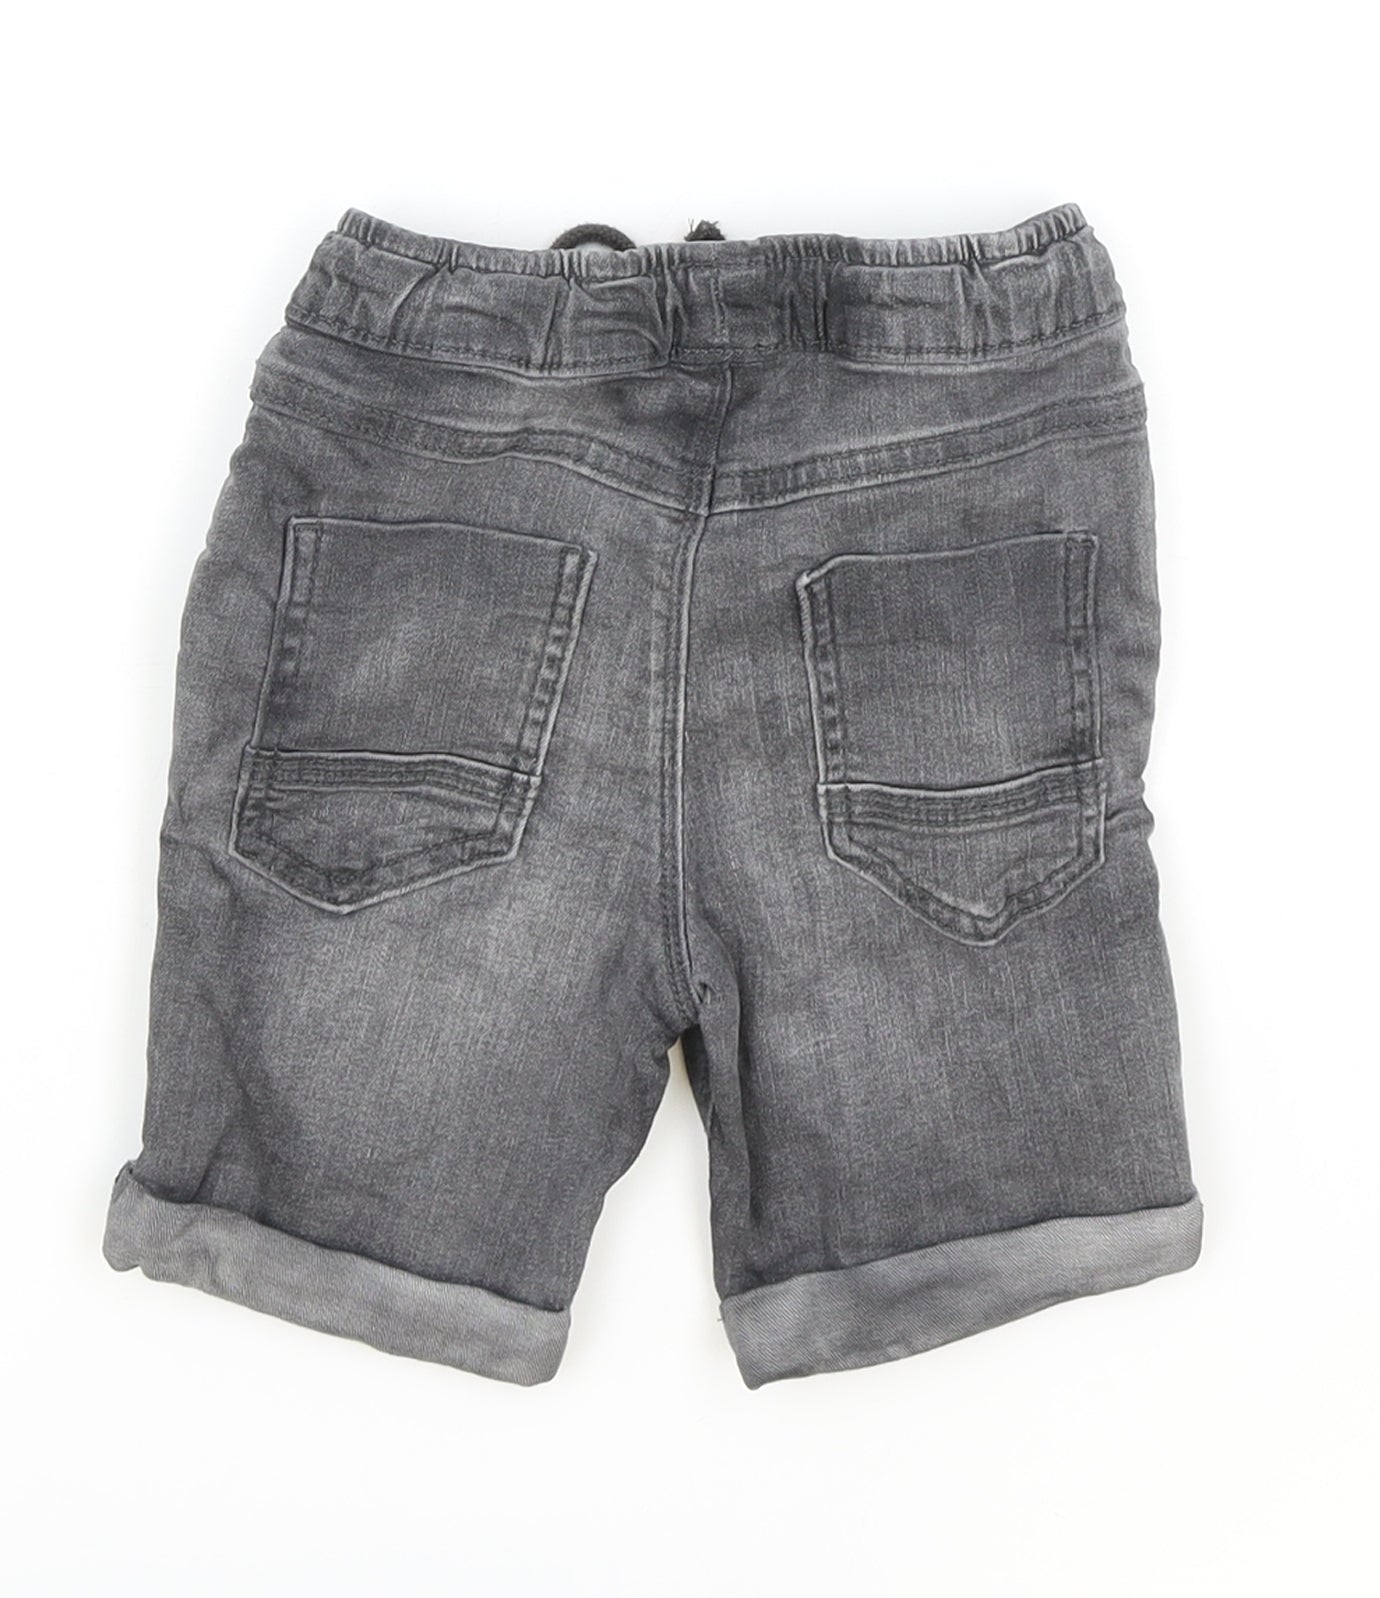 George Boys Grey Cotton Bermuda Shorts Size 3-4 Years Regular Drawstring